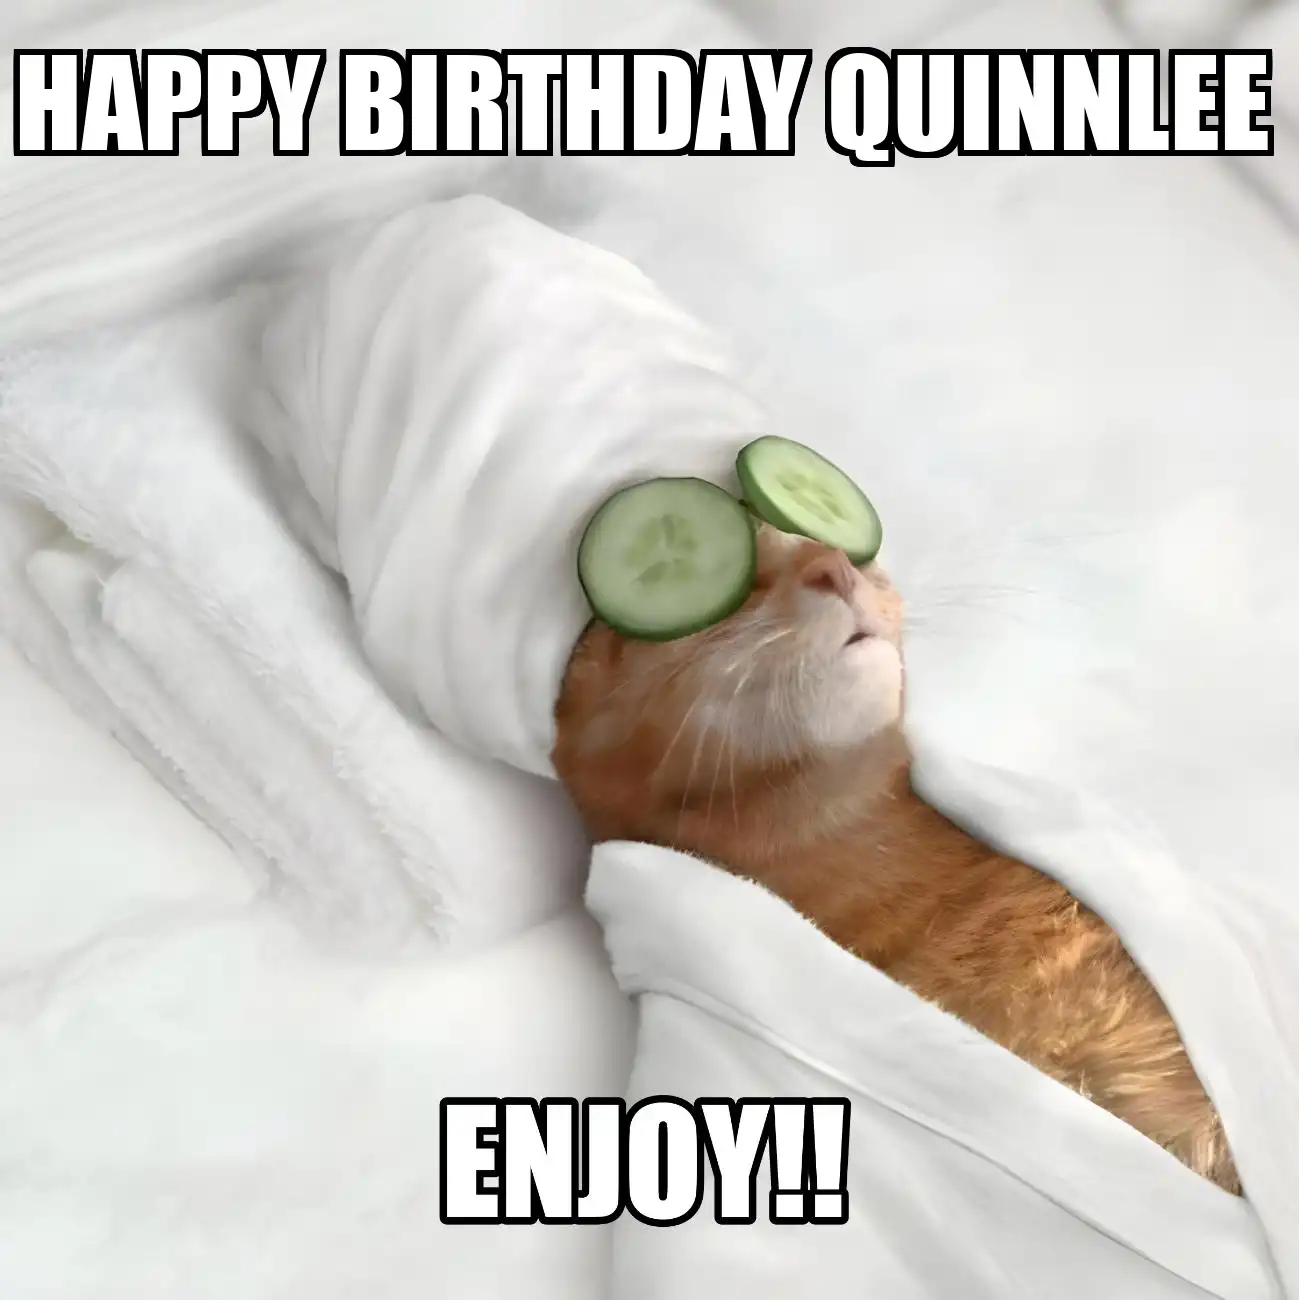 Happy Birthday Quinnlee Enjoy Cat Meme